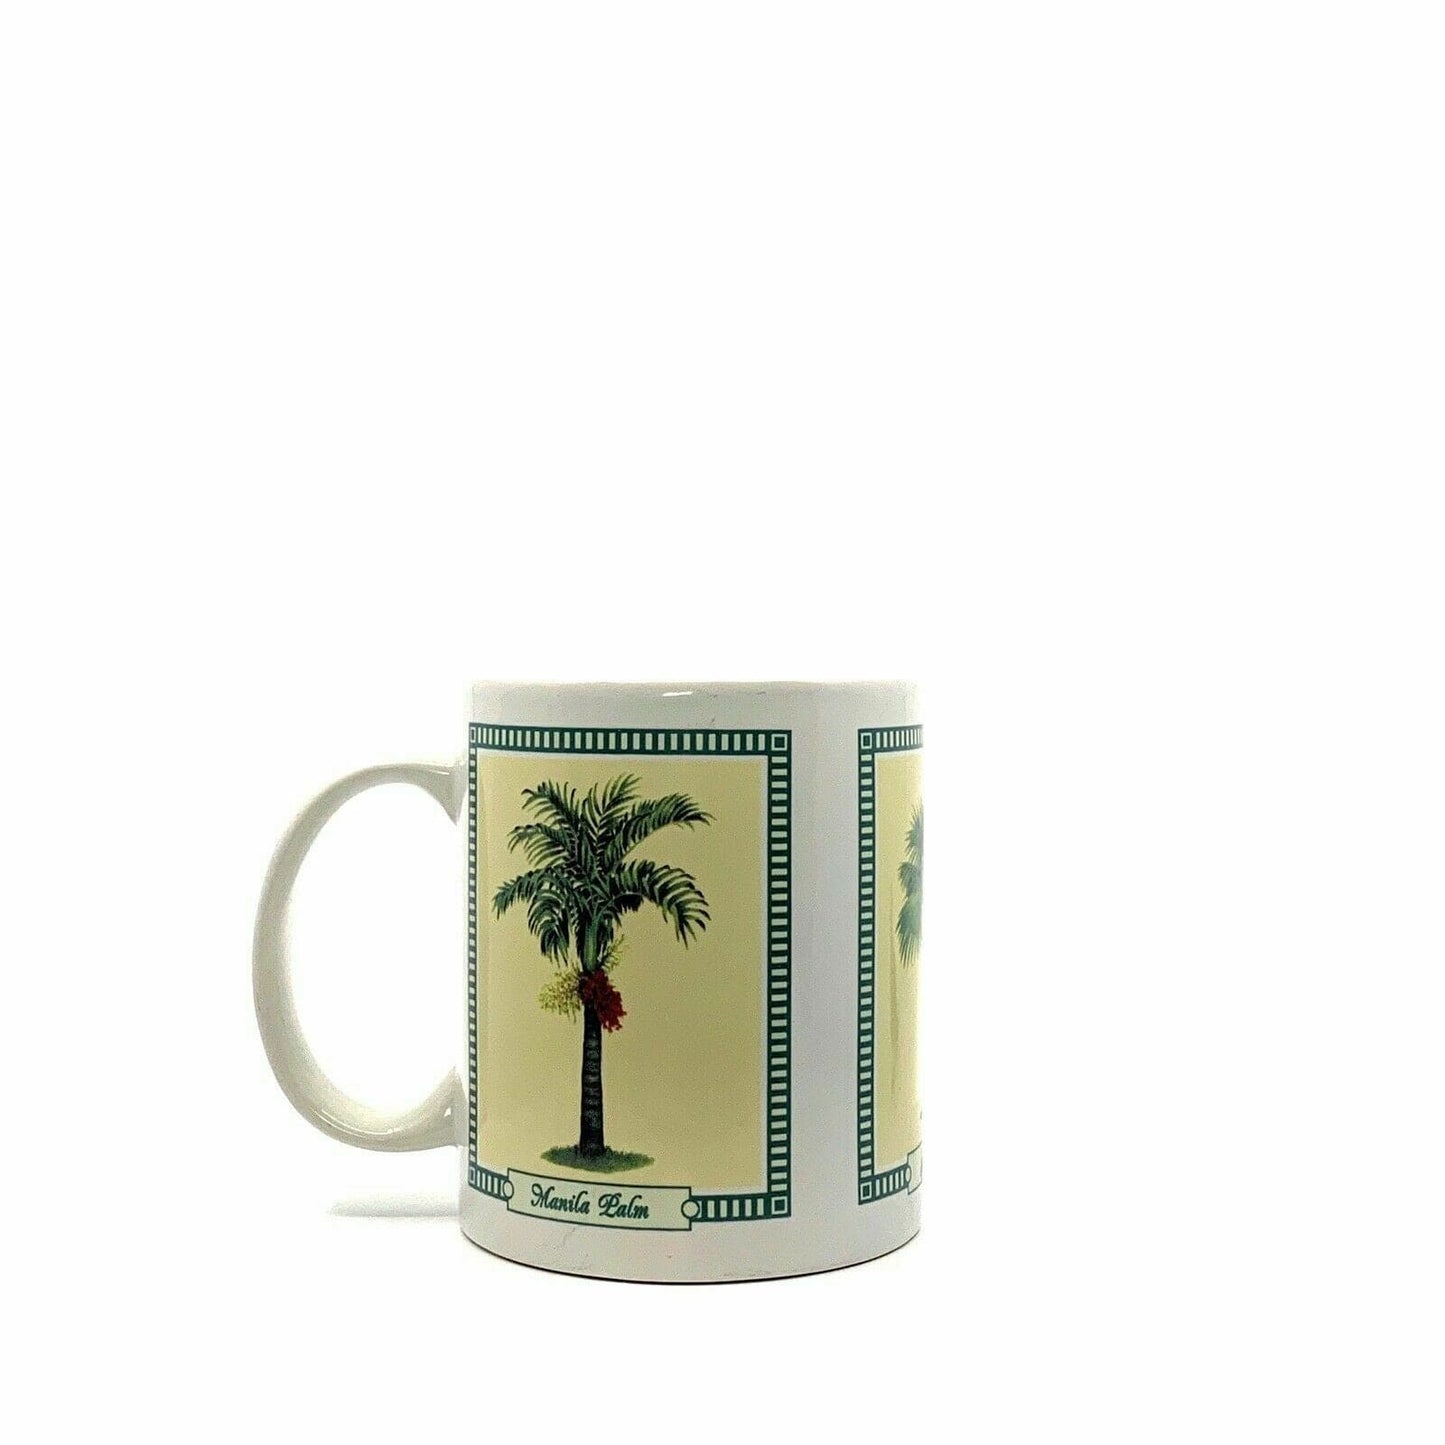 Hilo Hattie The Store Of Hawaii Coffee Tea Mug Cup Tropical Palms 2005